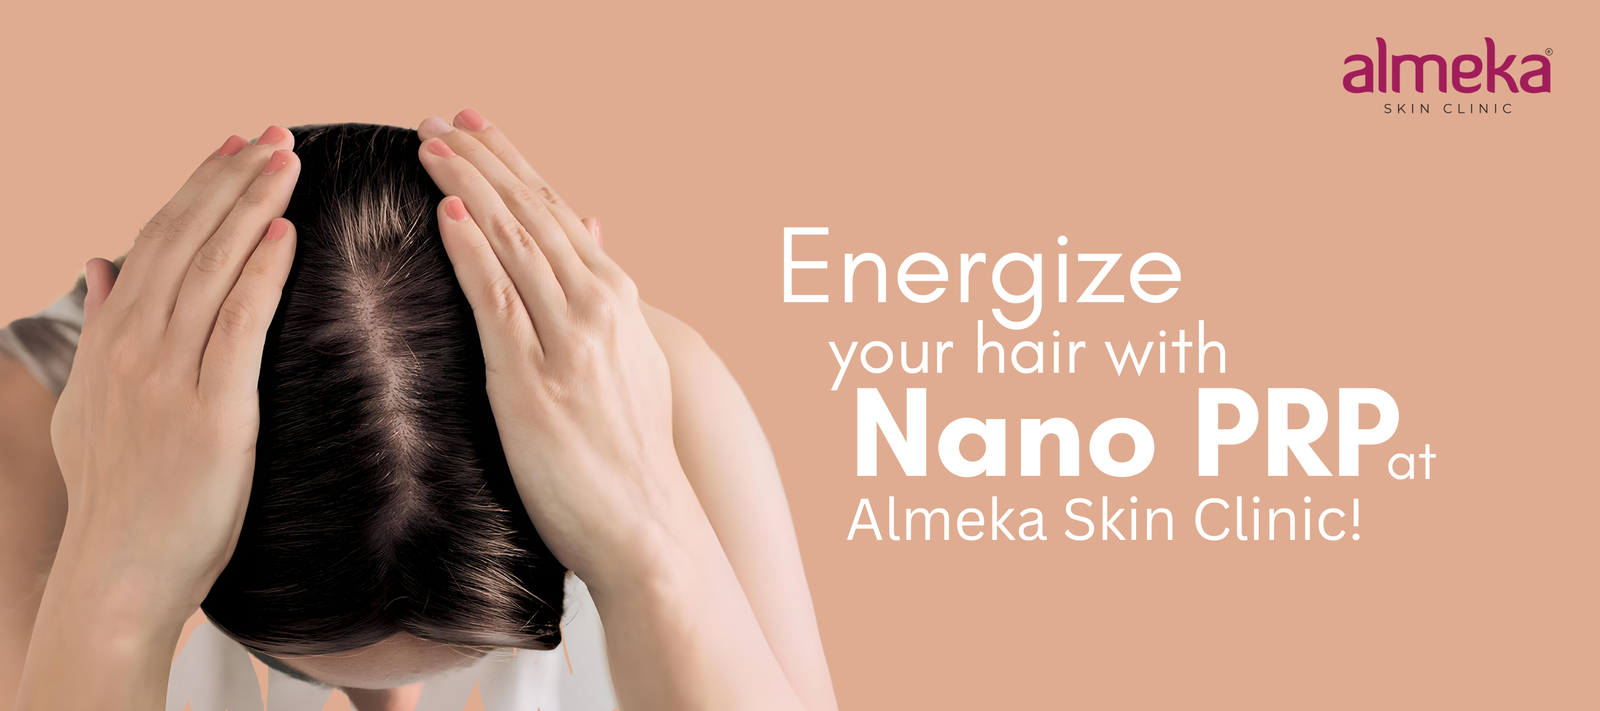 Hair Restoration with Nano PRP at Almeka Skin Clinic